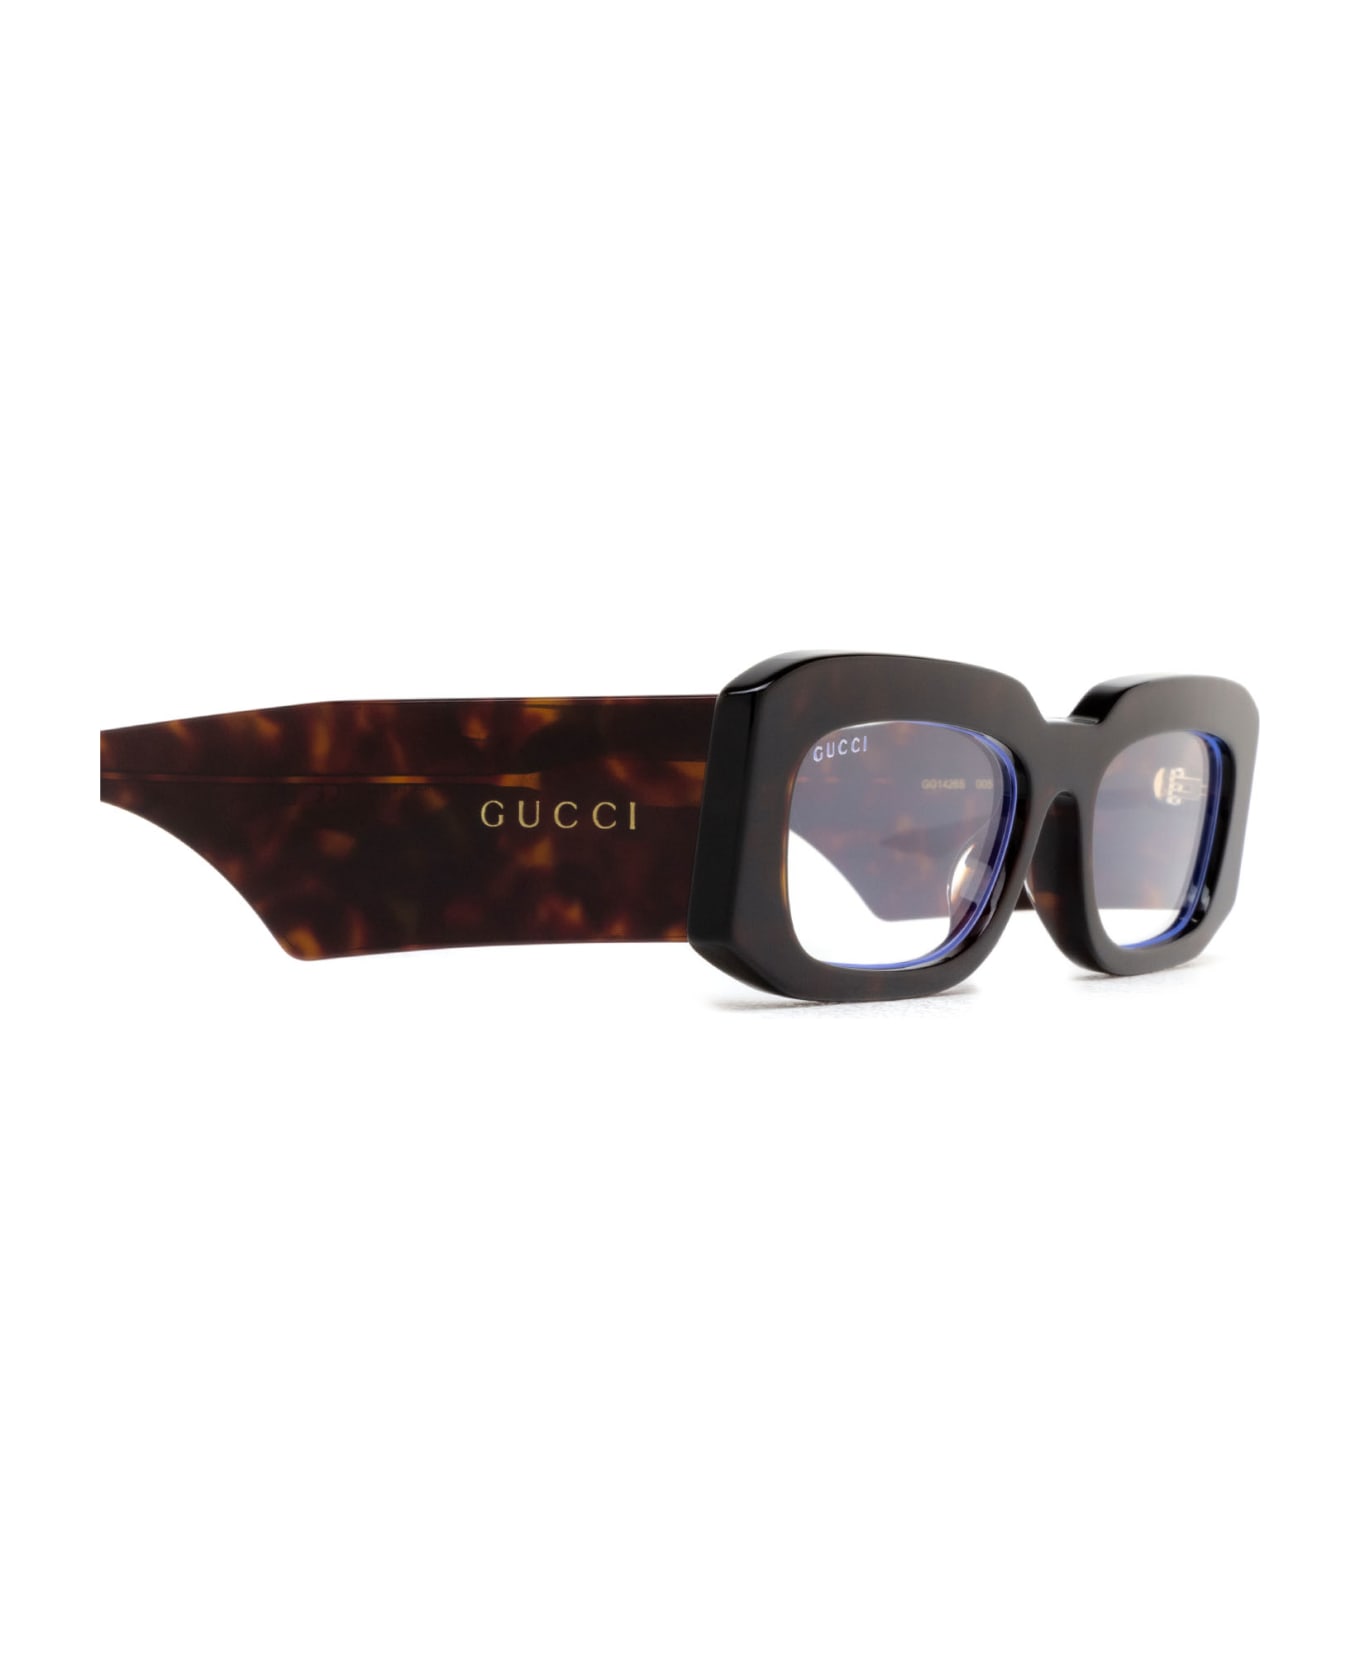 Gucci Eyewear Gg1426s Havana Sunglasses - Havana サングラス